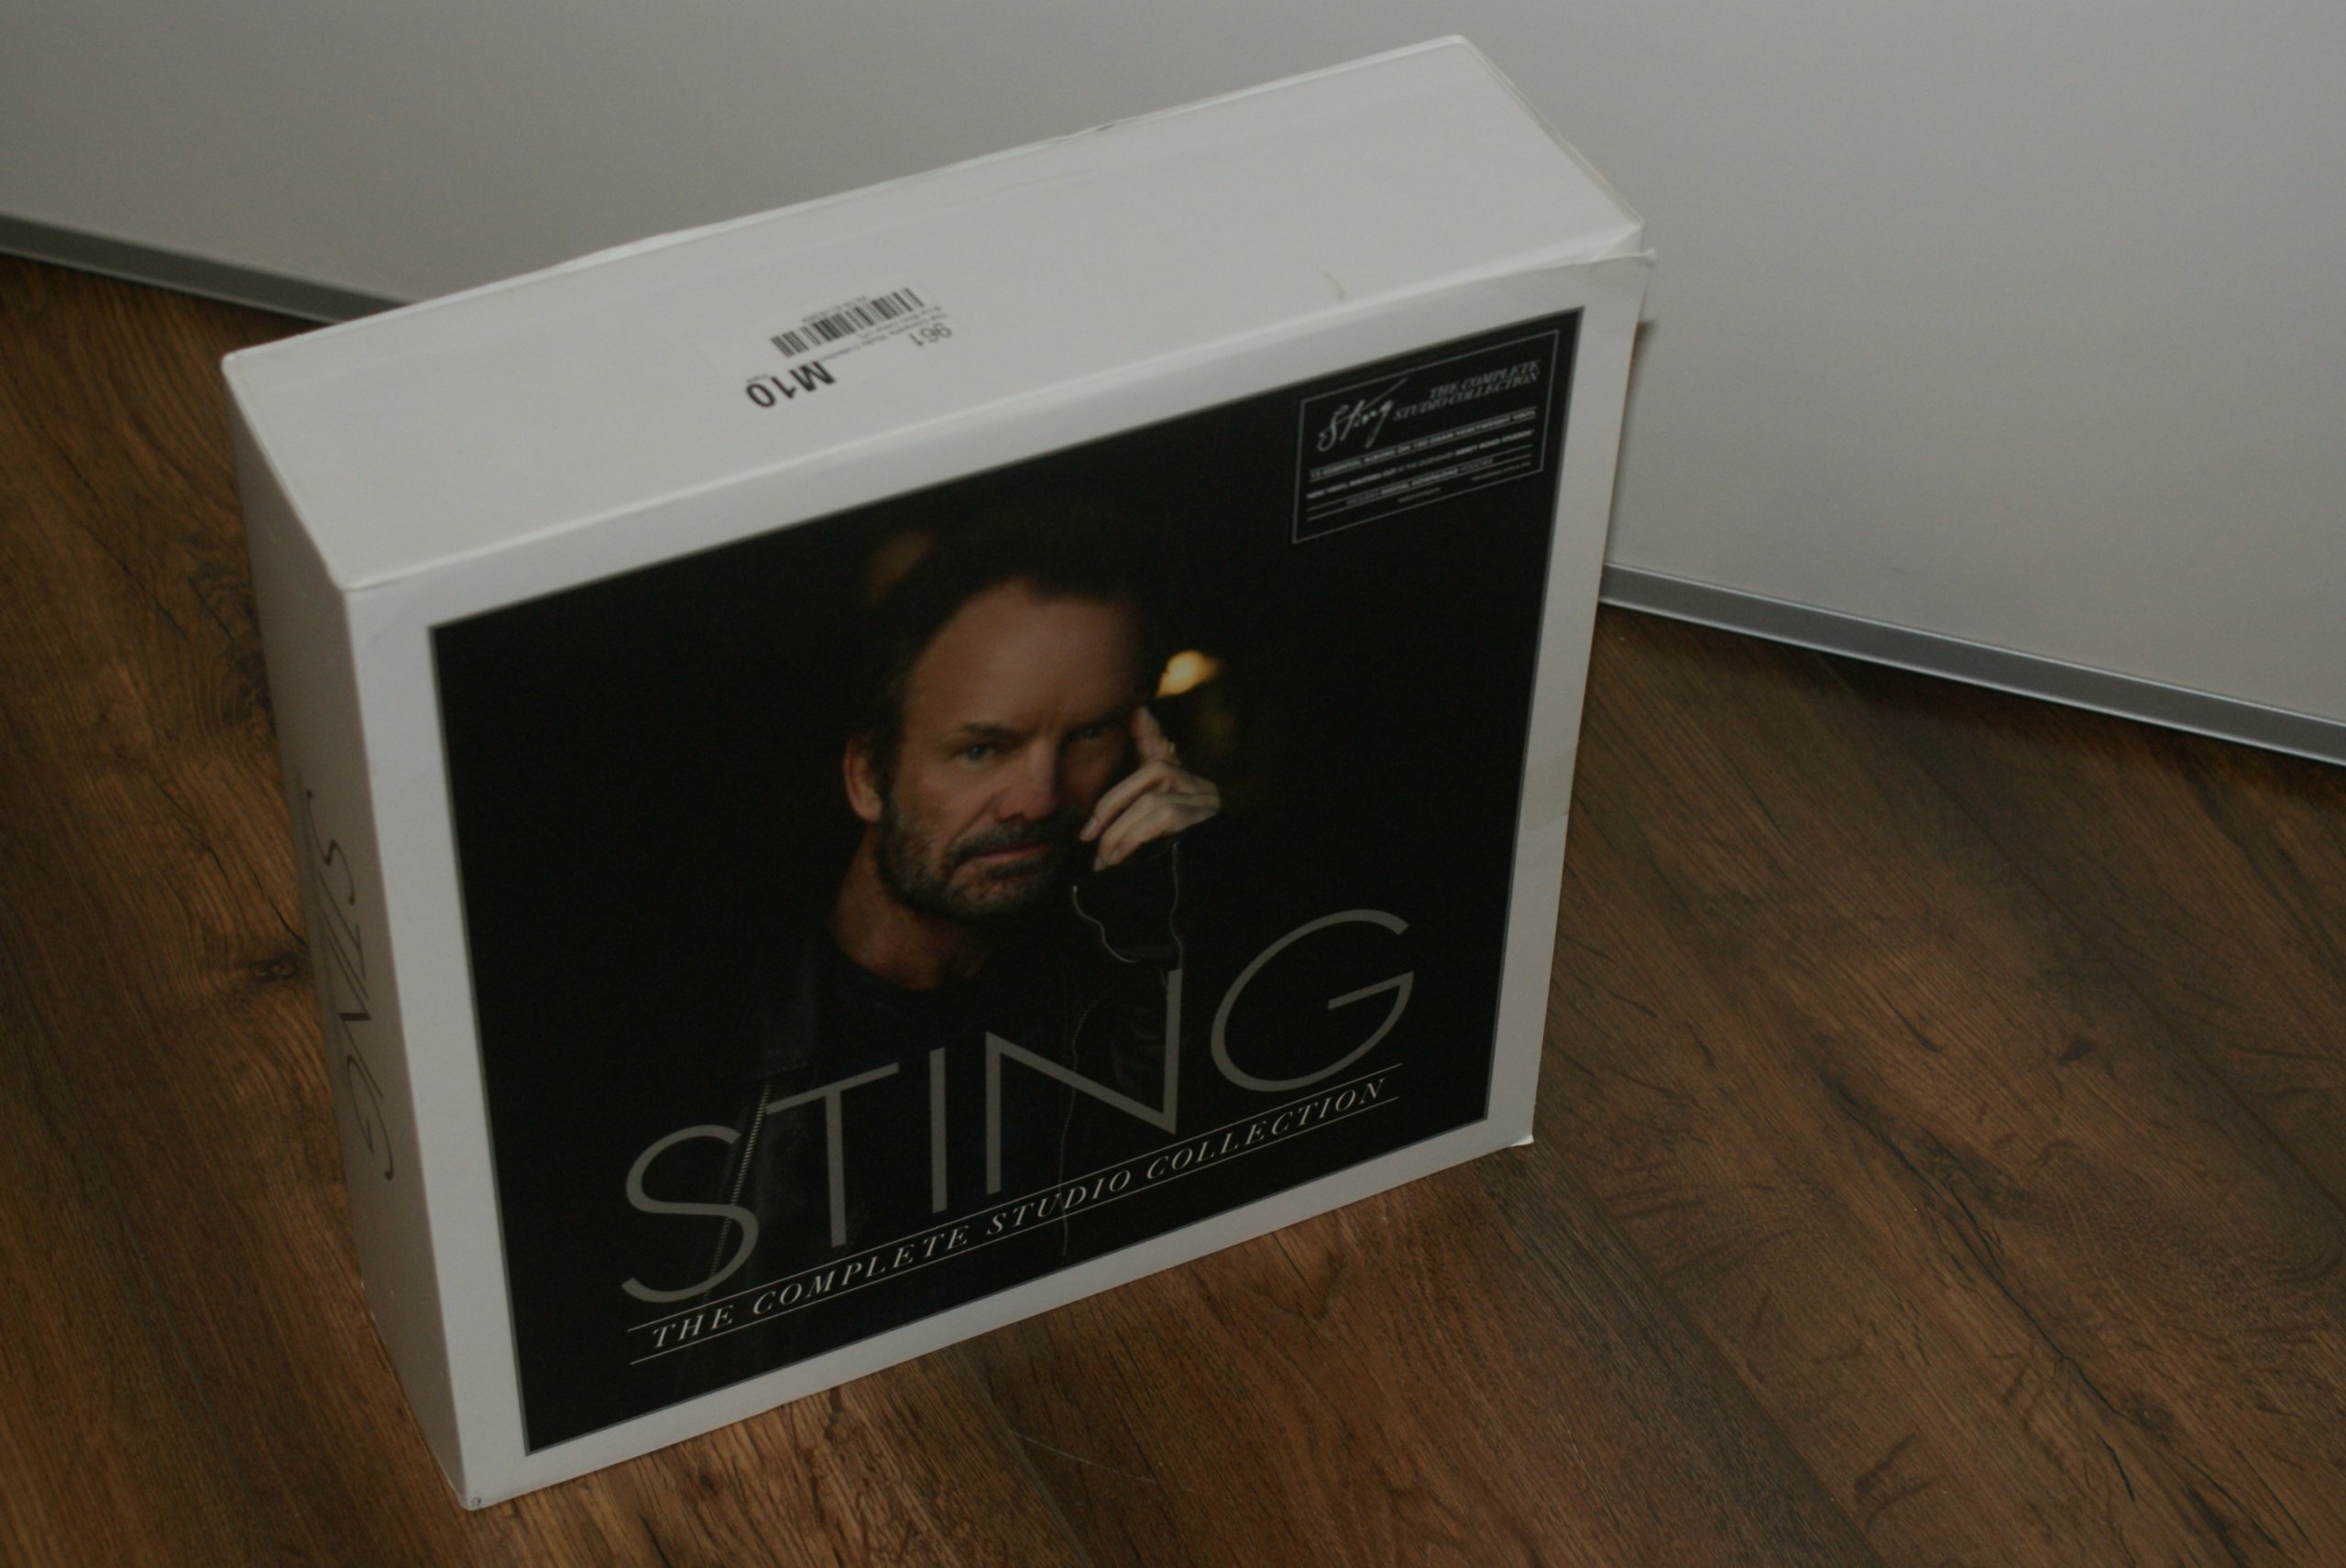 Sting The Complete Studio Collection VINYL 16 LP - 7290337693